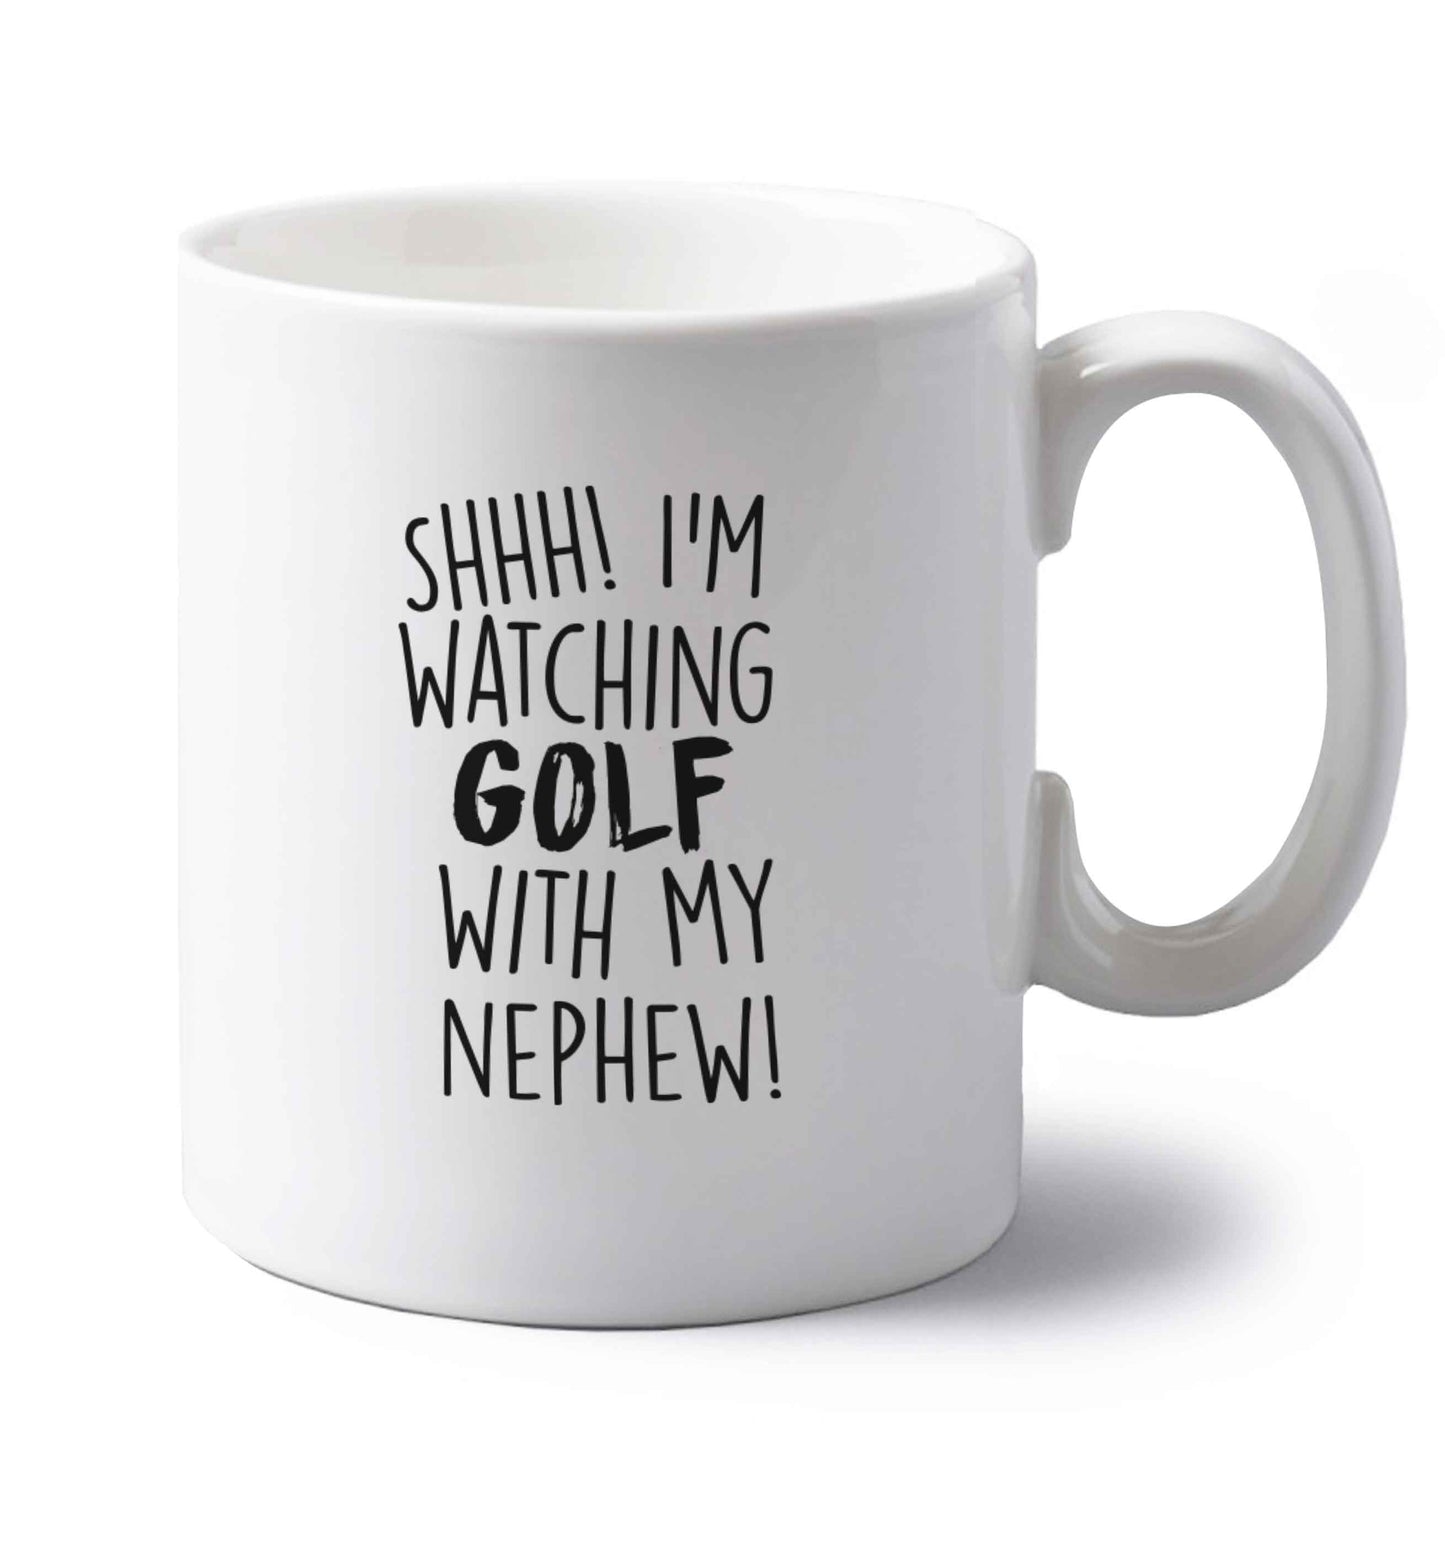 Shh I'm watching golf with my nephew left handed white ceramic mug 